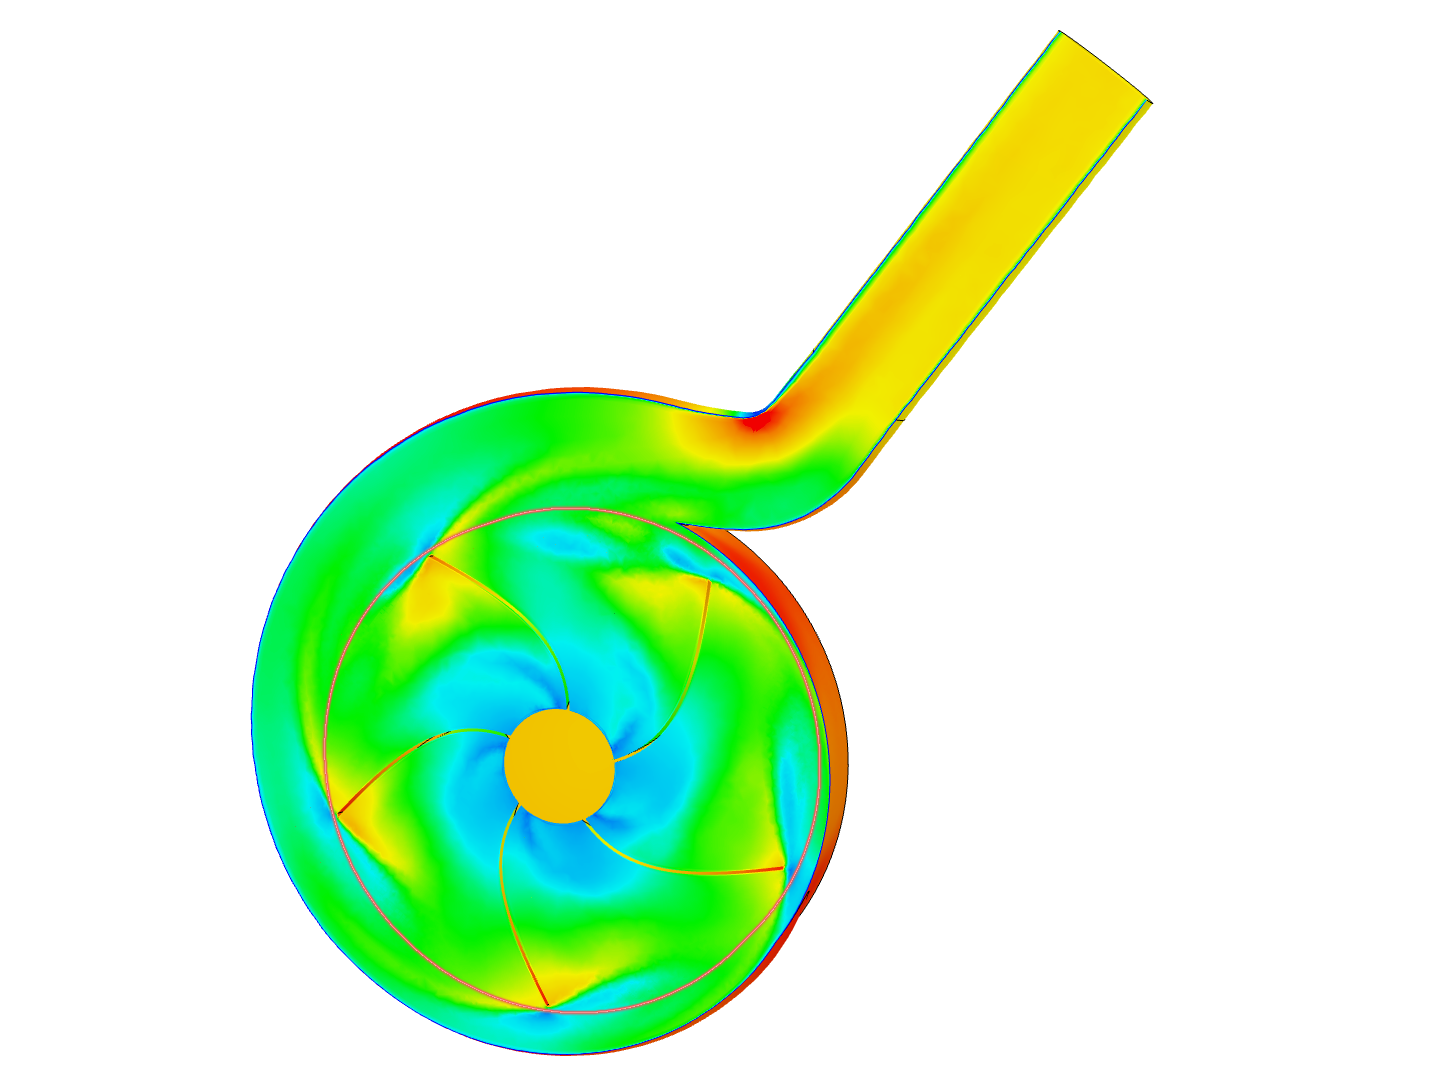 Pump Simulation - Coursera image